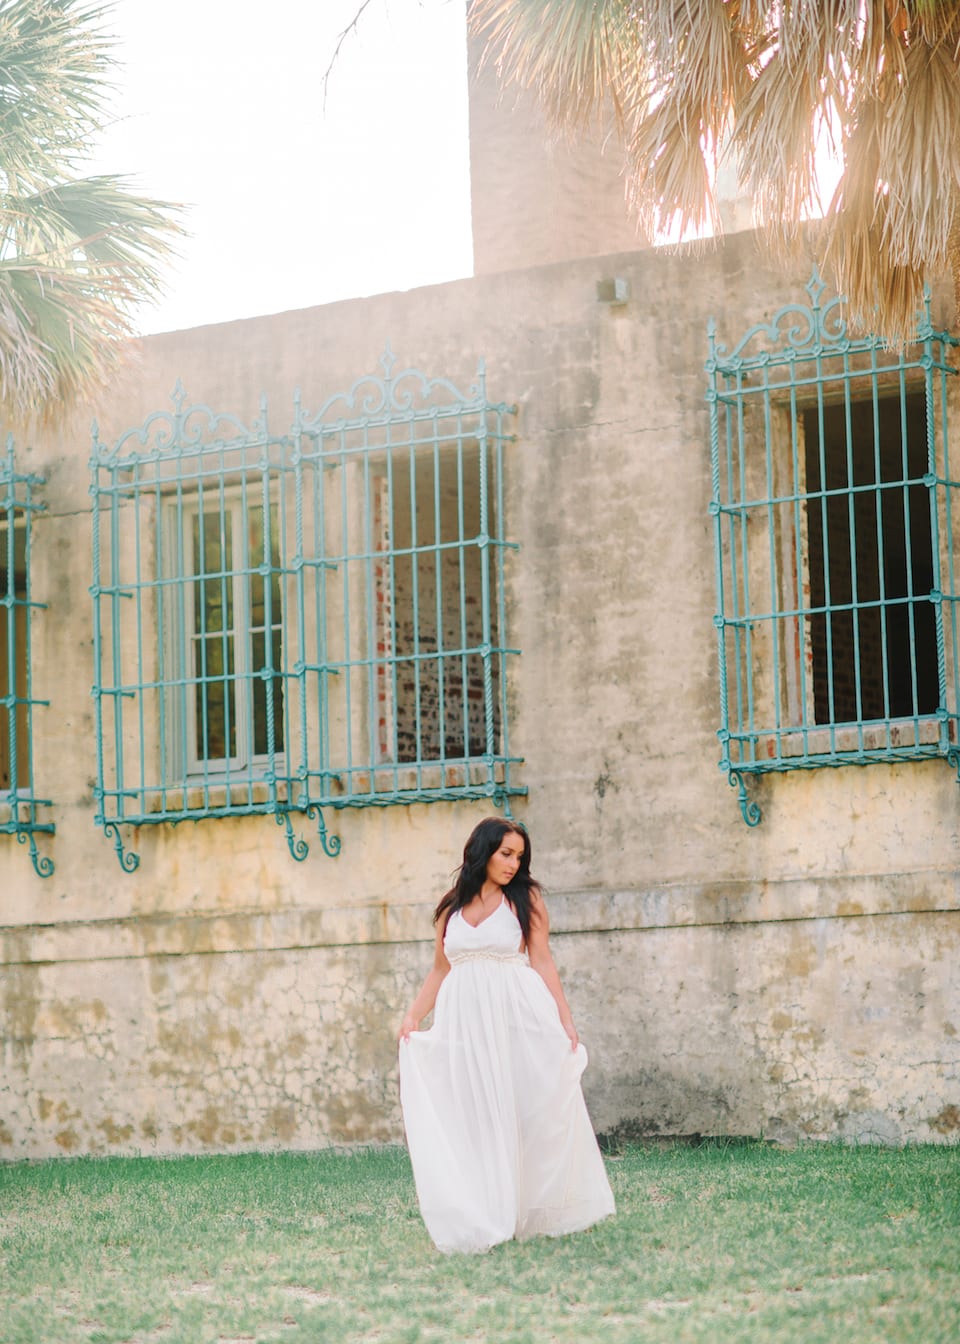 Stunning White Dresses Senior Photo Shoot - Simple White Dress for Senior Pictures near Amazing Castle in South Carolina